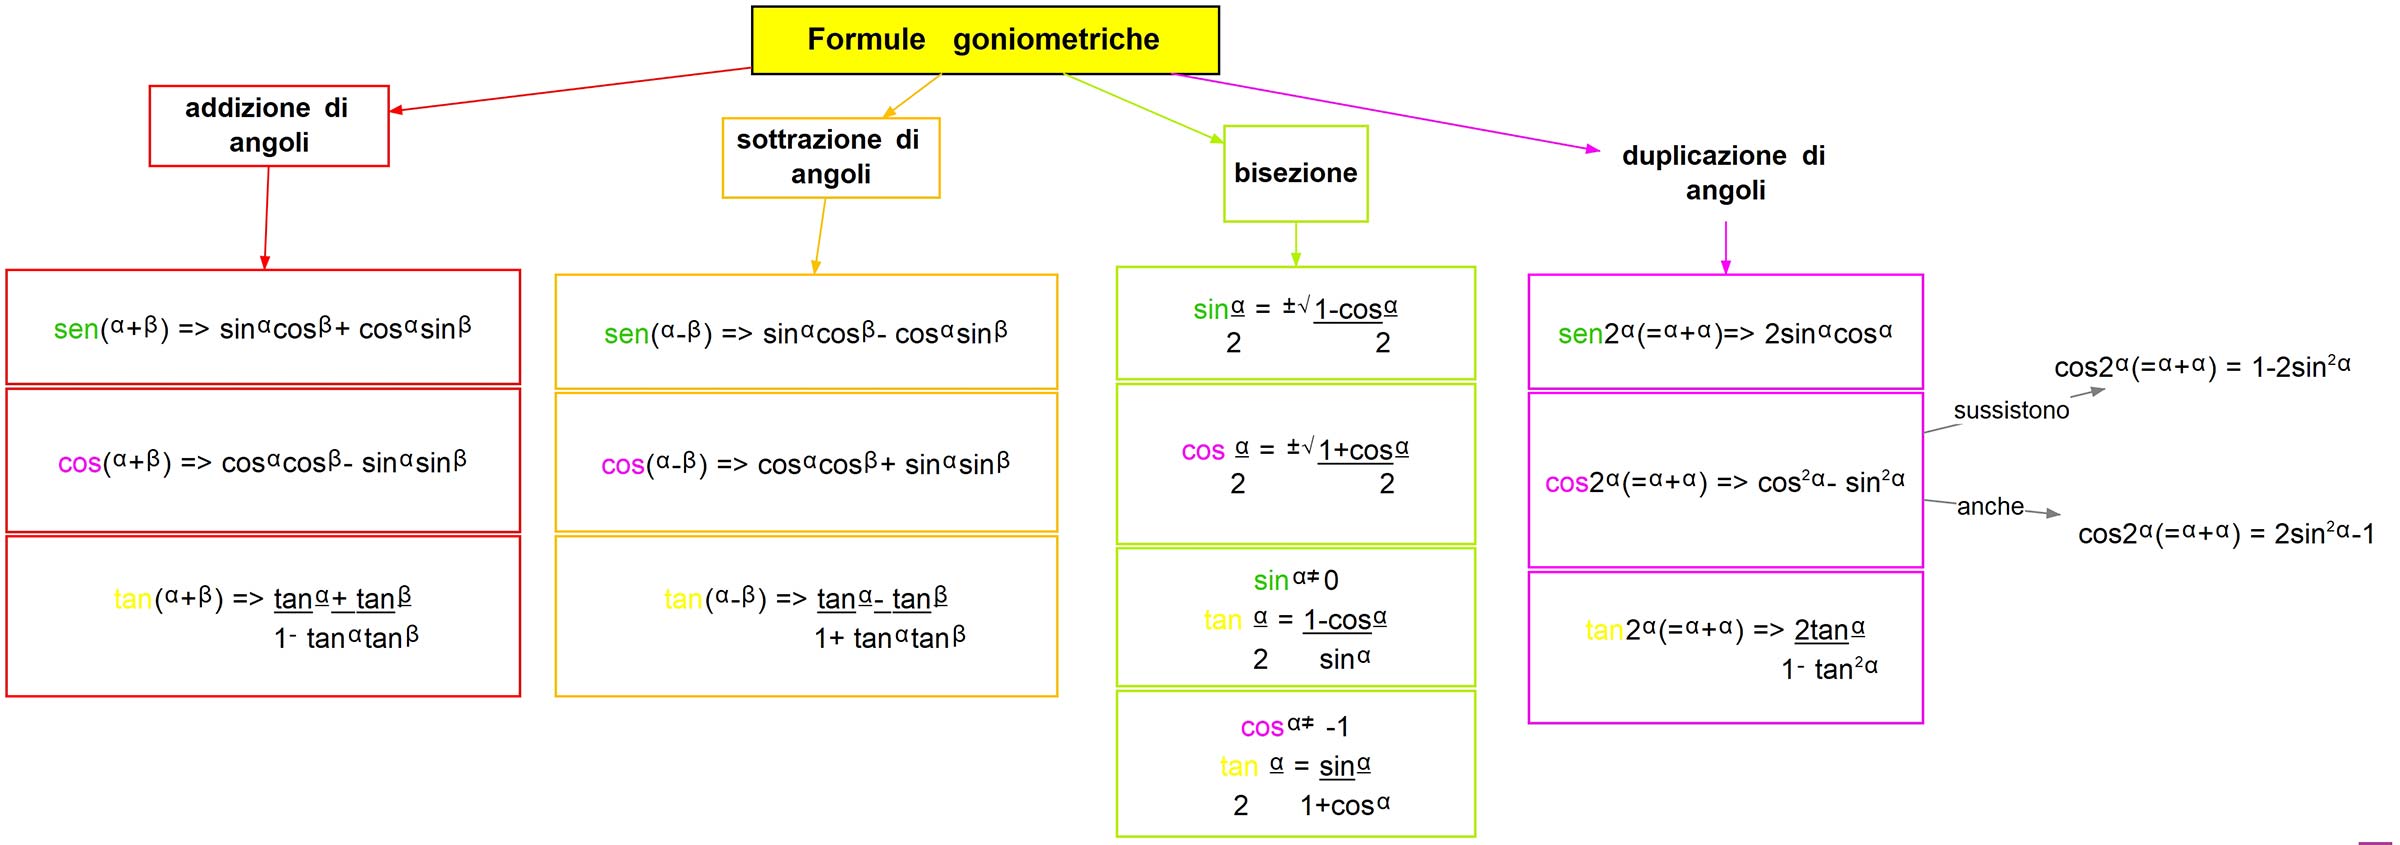 Formule goniometriche